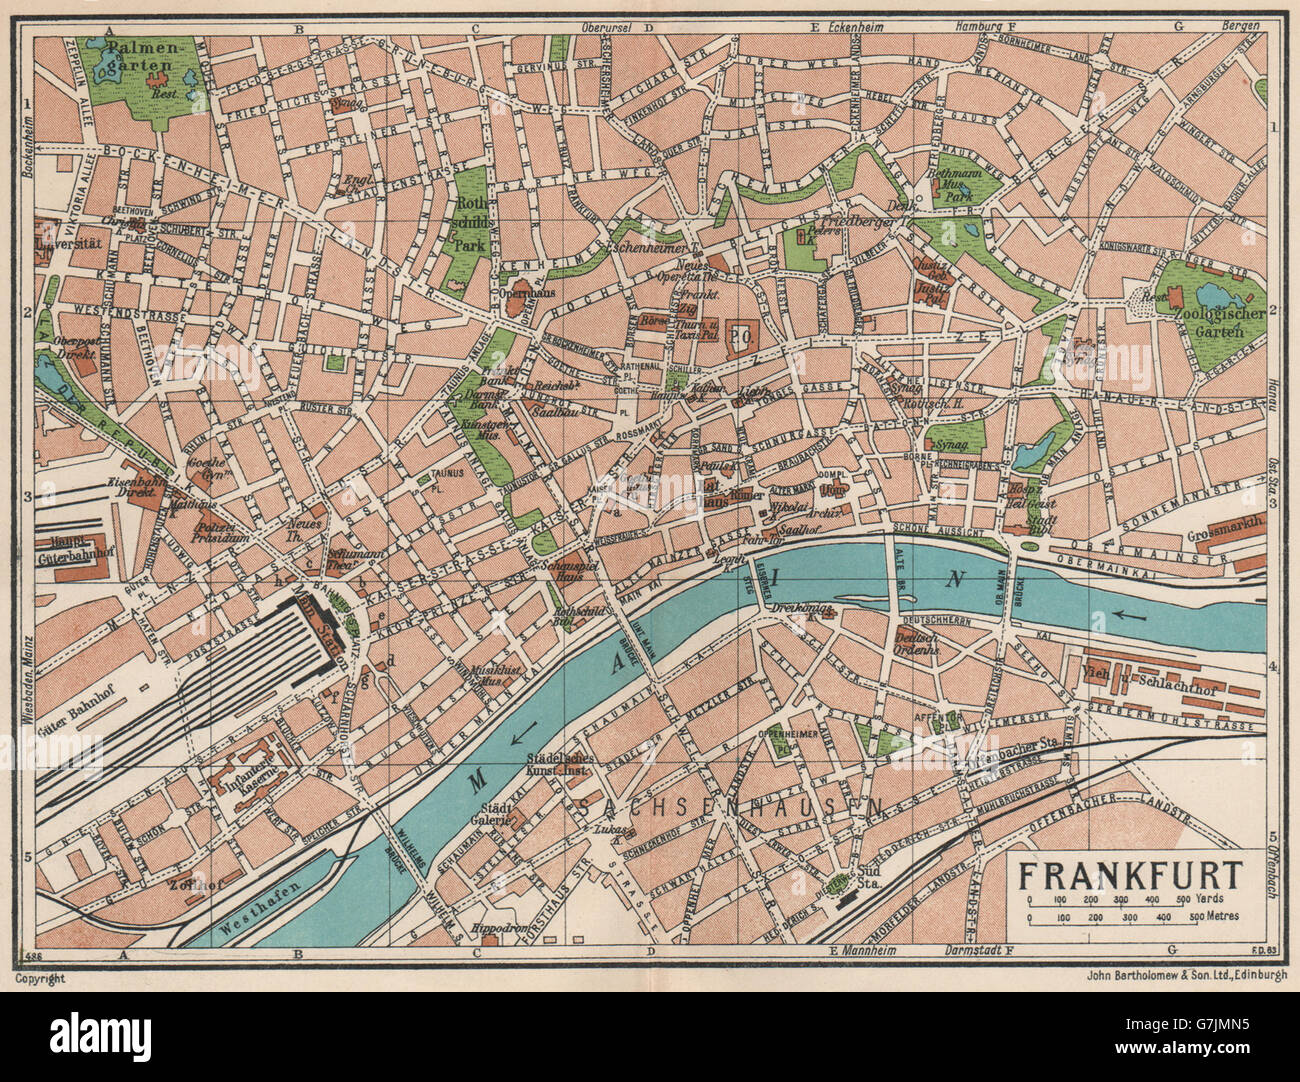 FRANKFURT. Vintage town city map plan. Germany, 1933 Stock Photo